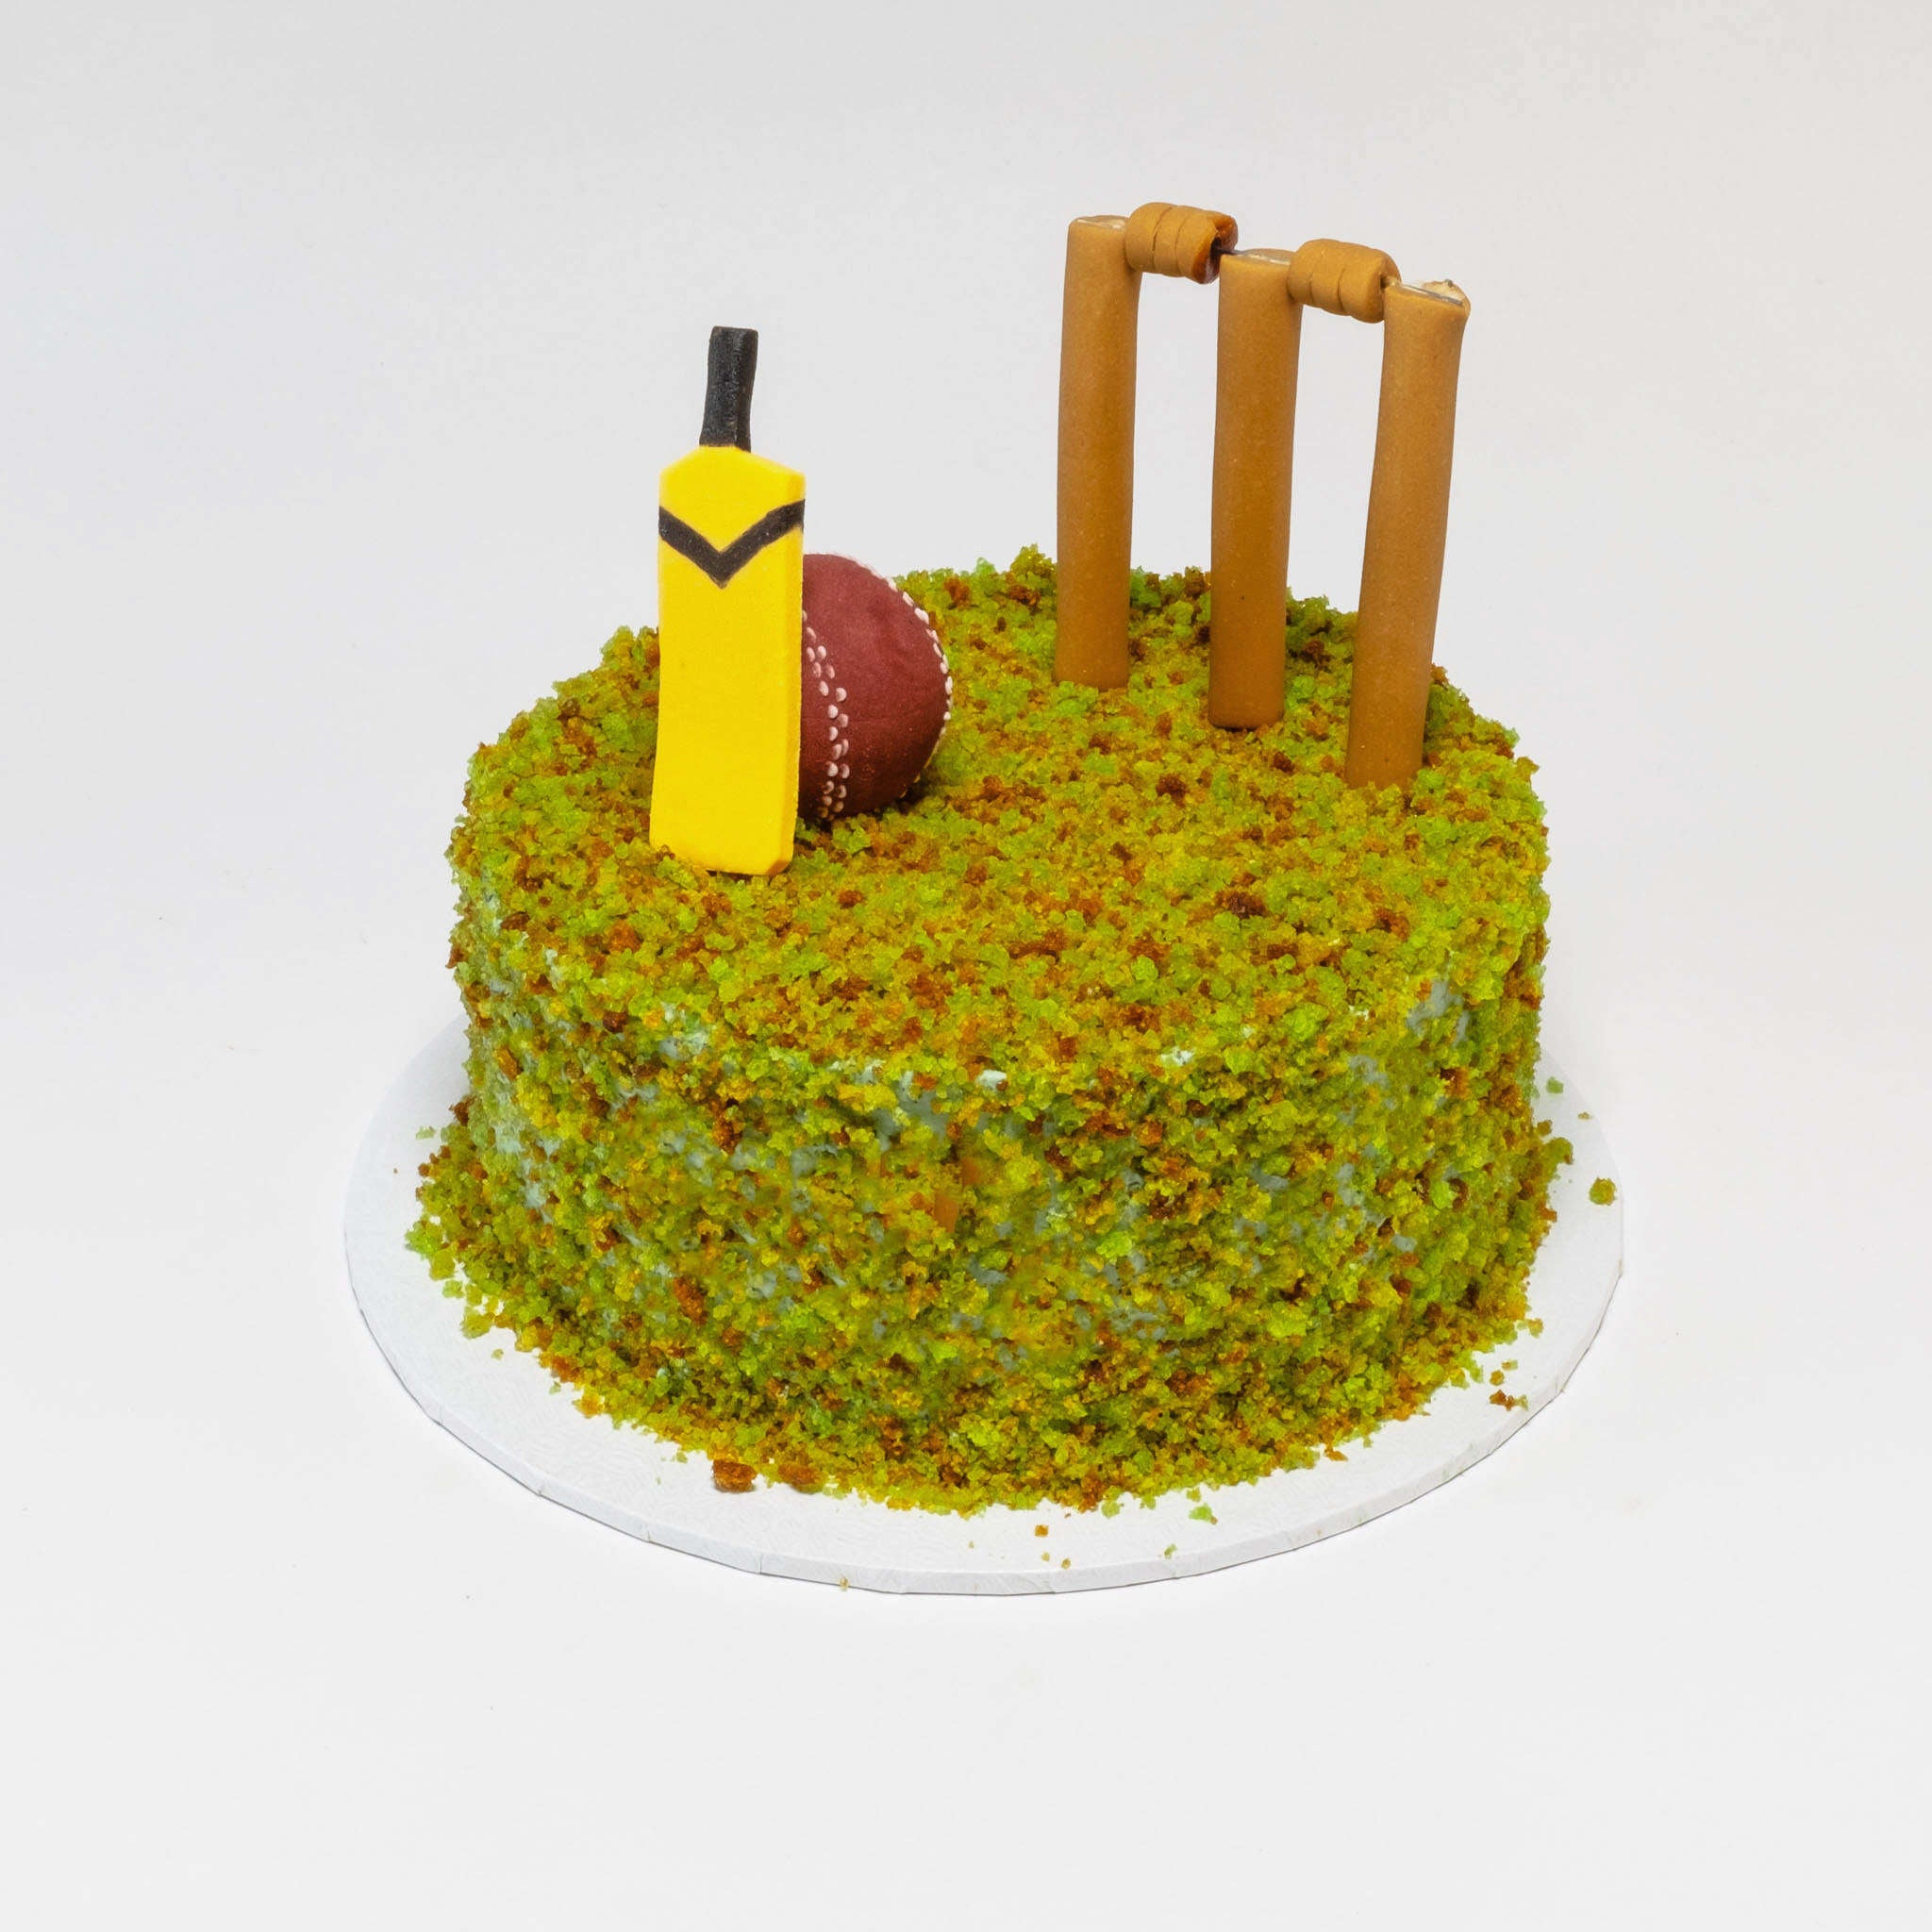 Homemade] Cricket Birthday Cake! : r/food